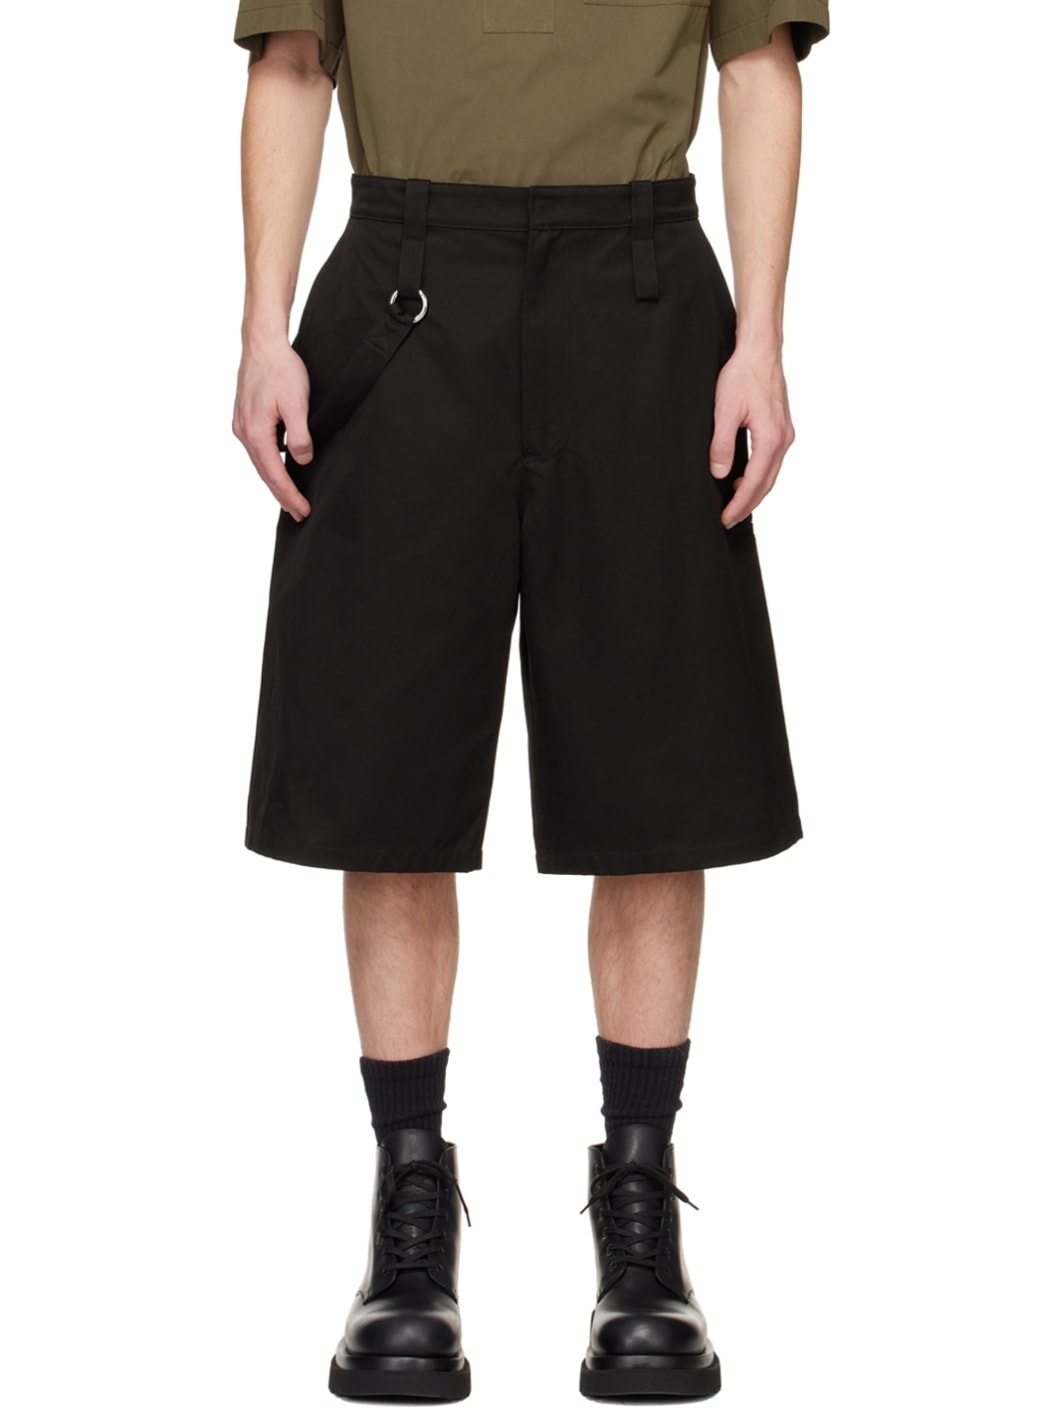 Black Strap Shorts - 1